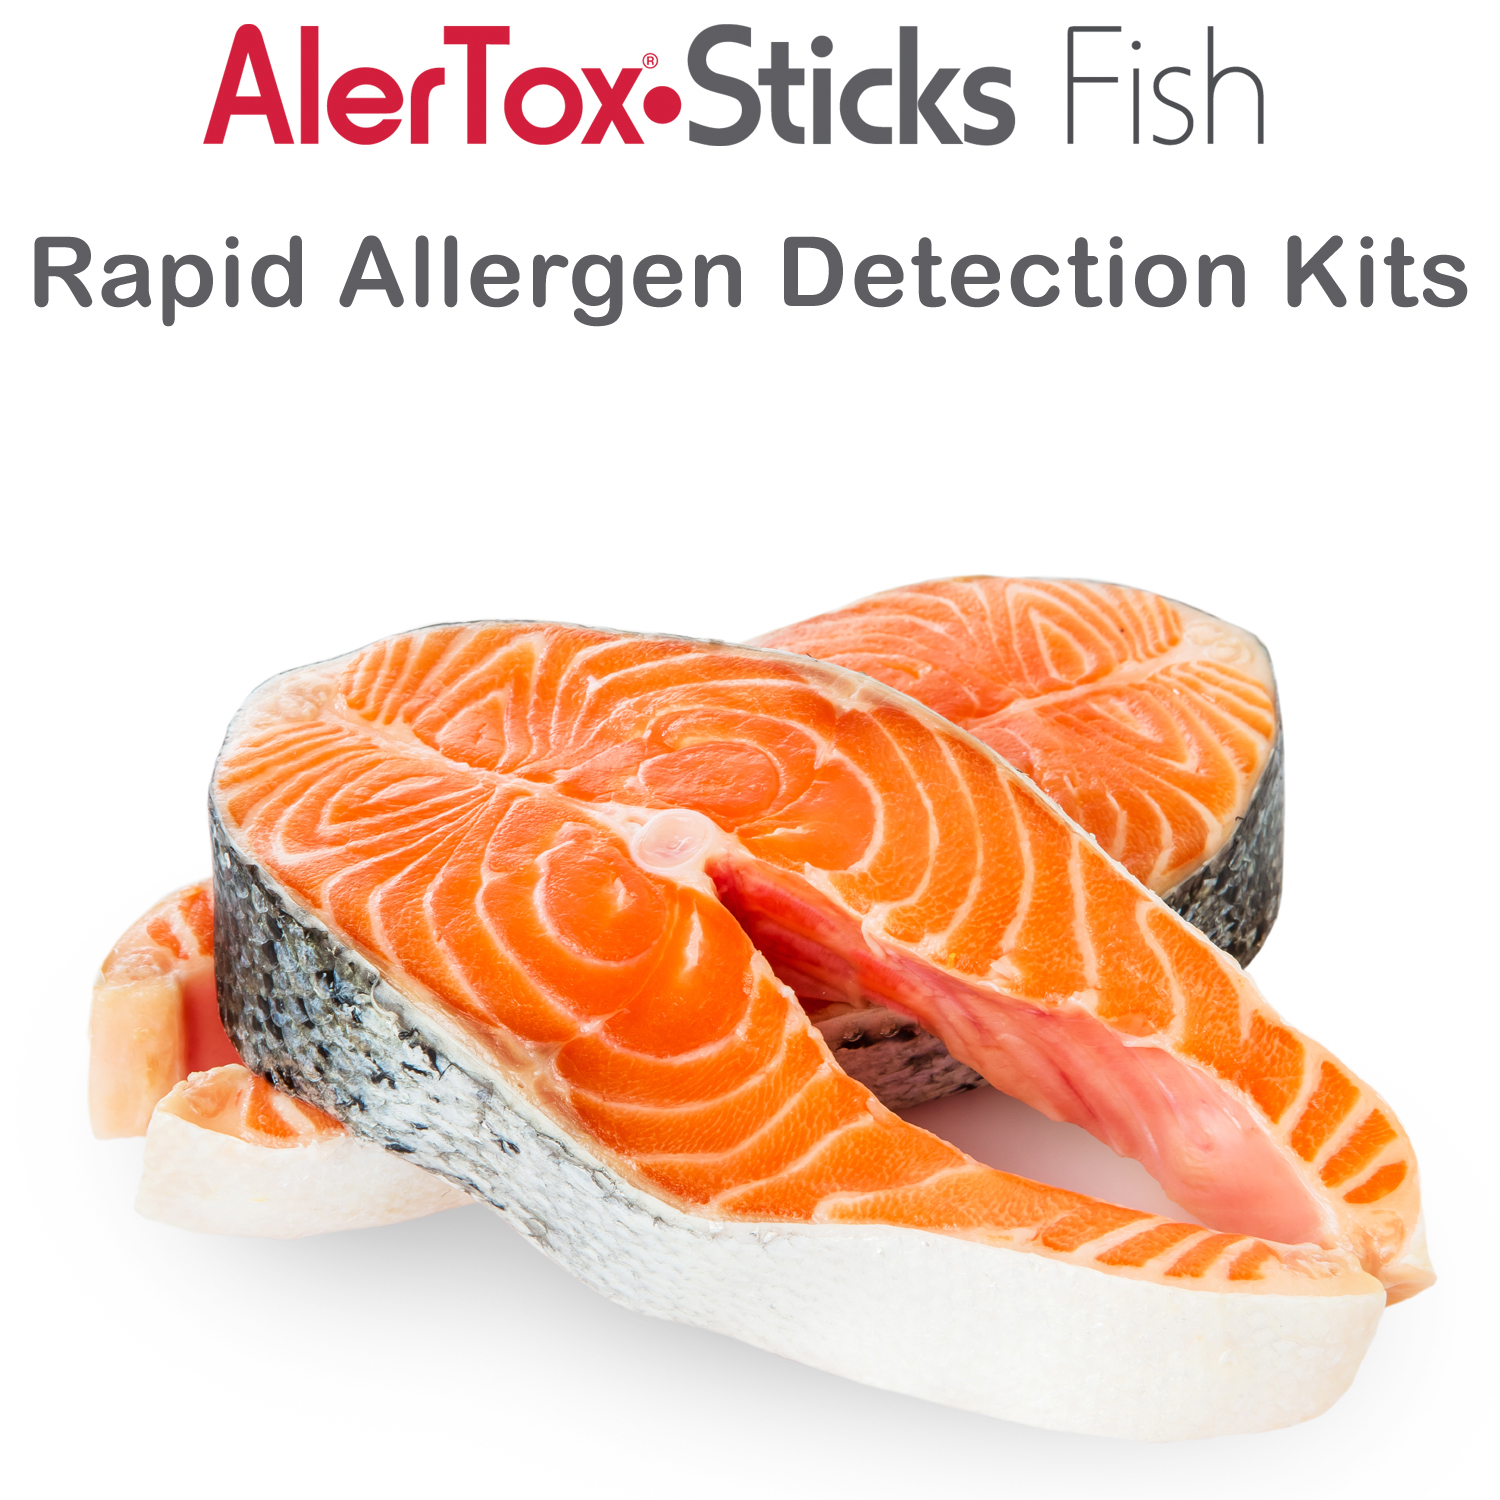 AlerTox Sticks Fish: Rapid testing for anitgens